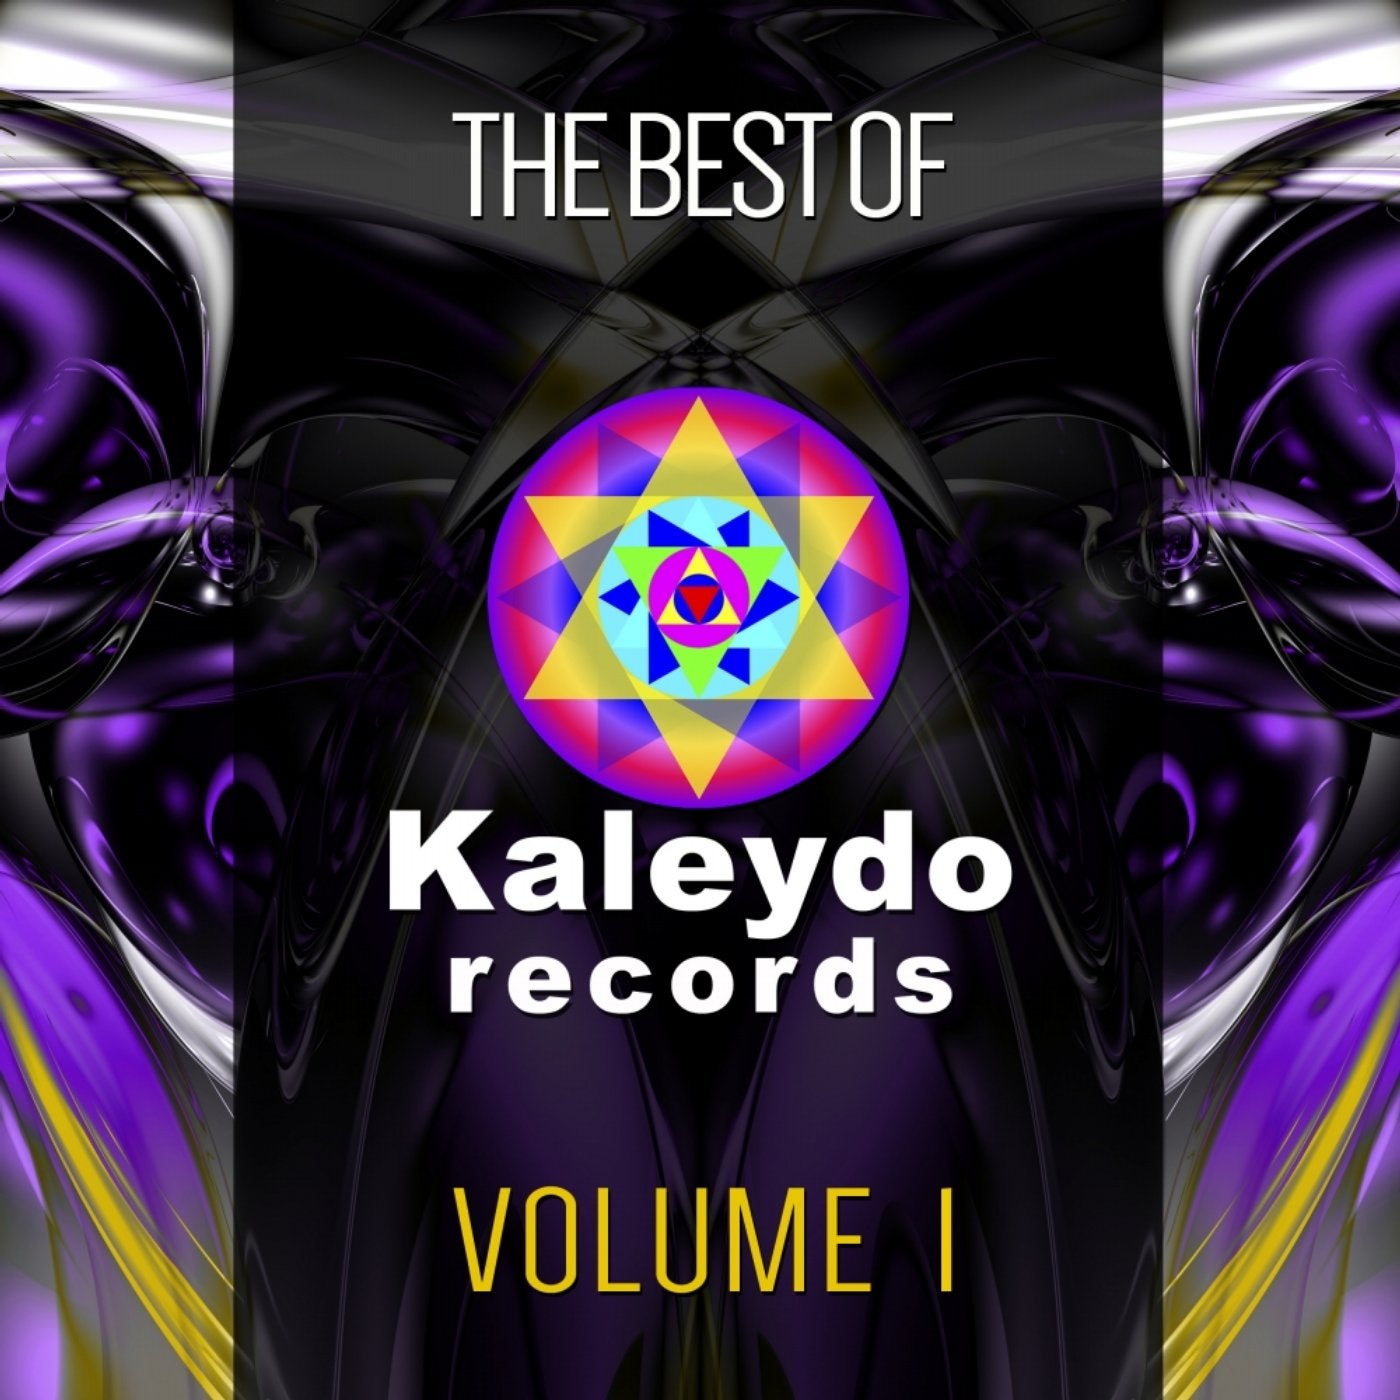 The Best Of Kaleydo Records Vol.1